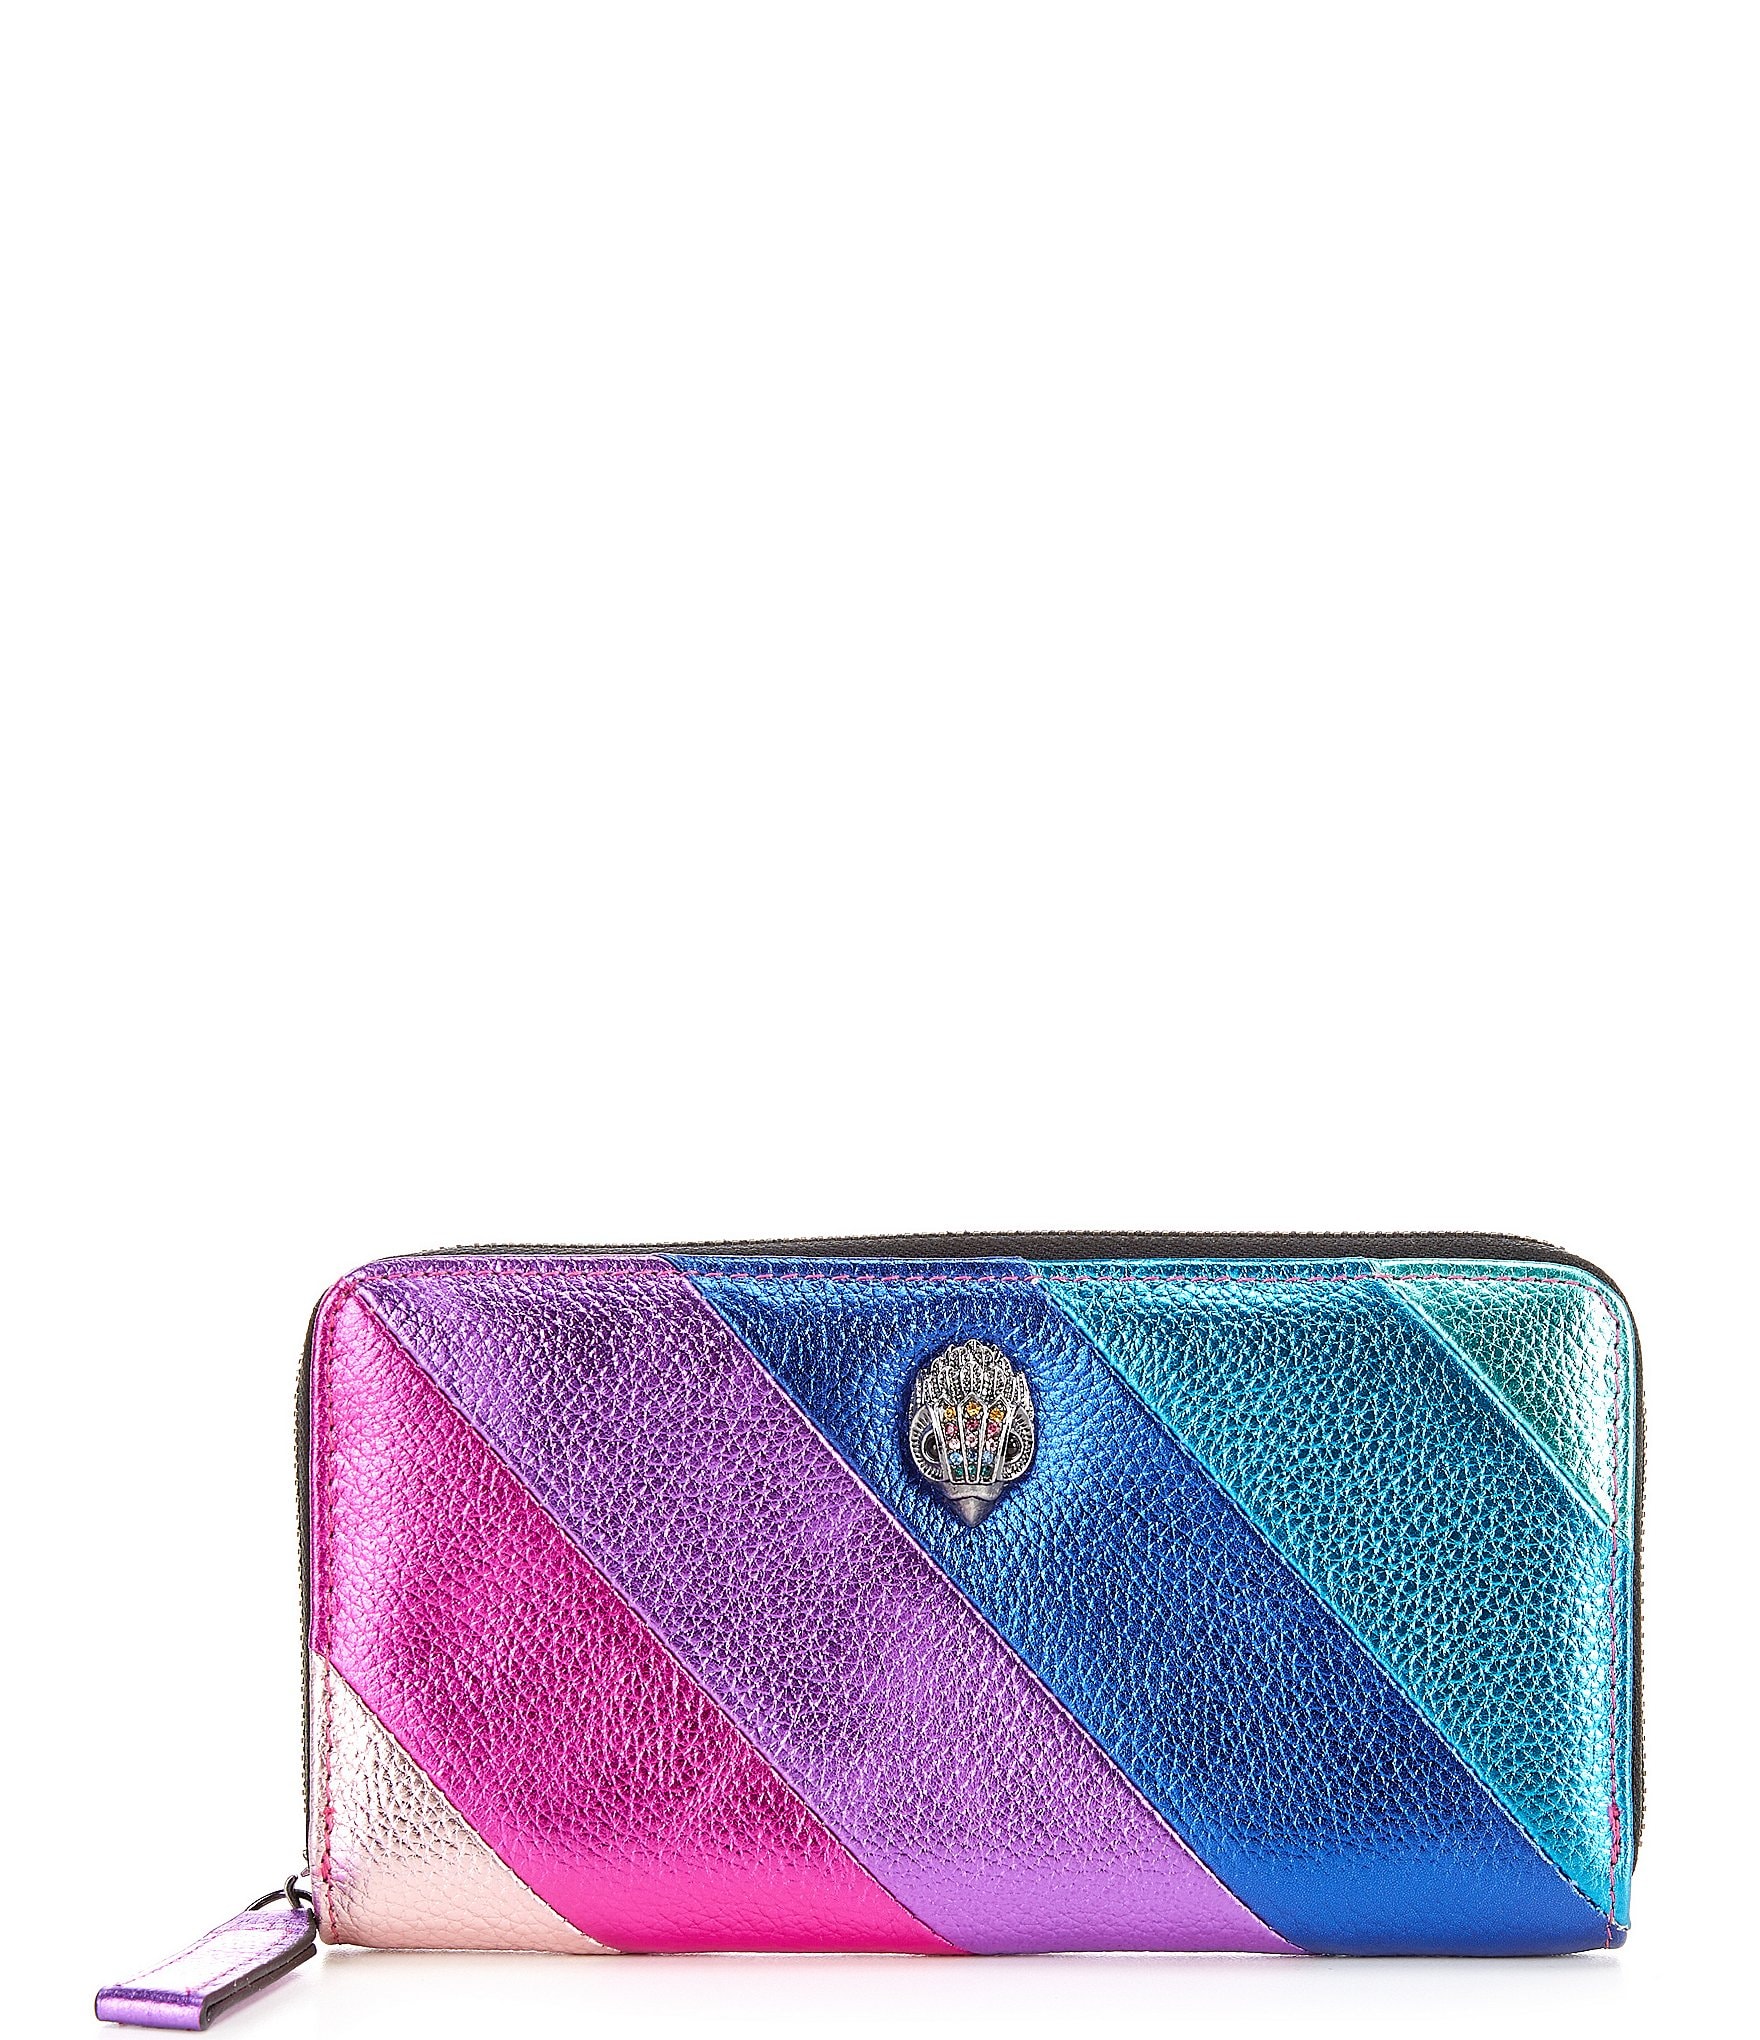 Coin Purse Colorful Rainbow Wallet Buckle Clutch Handbag For Women Girls Gift 